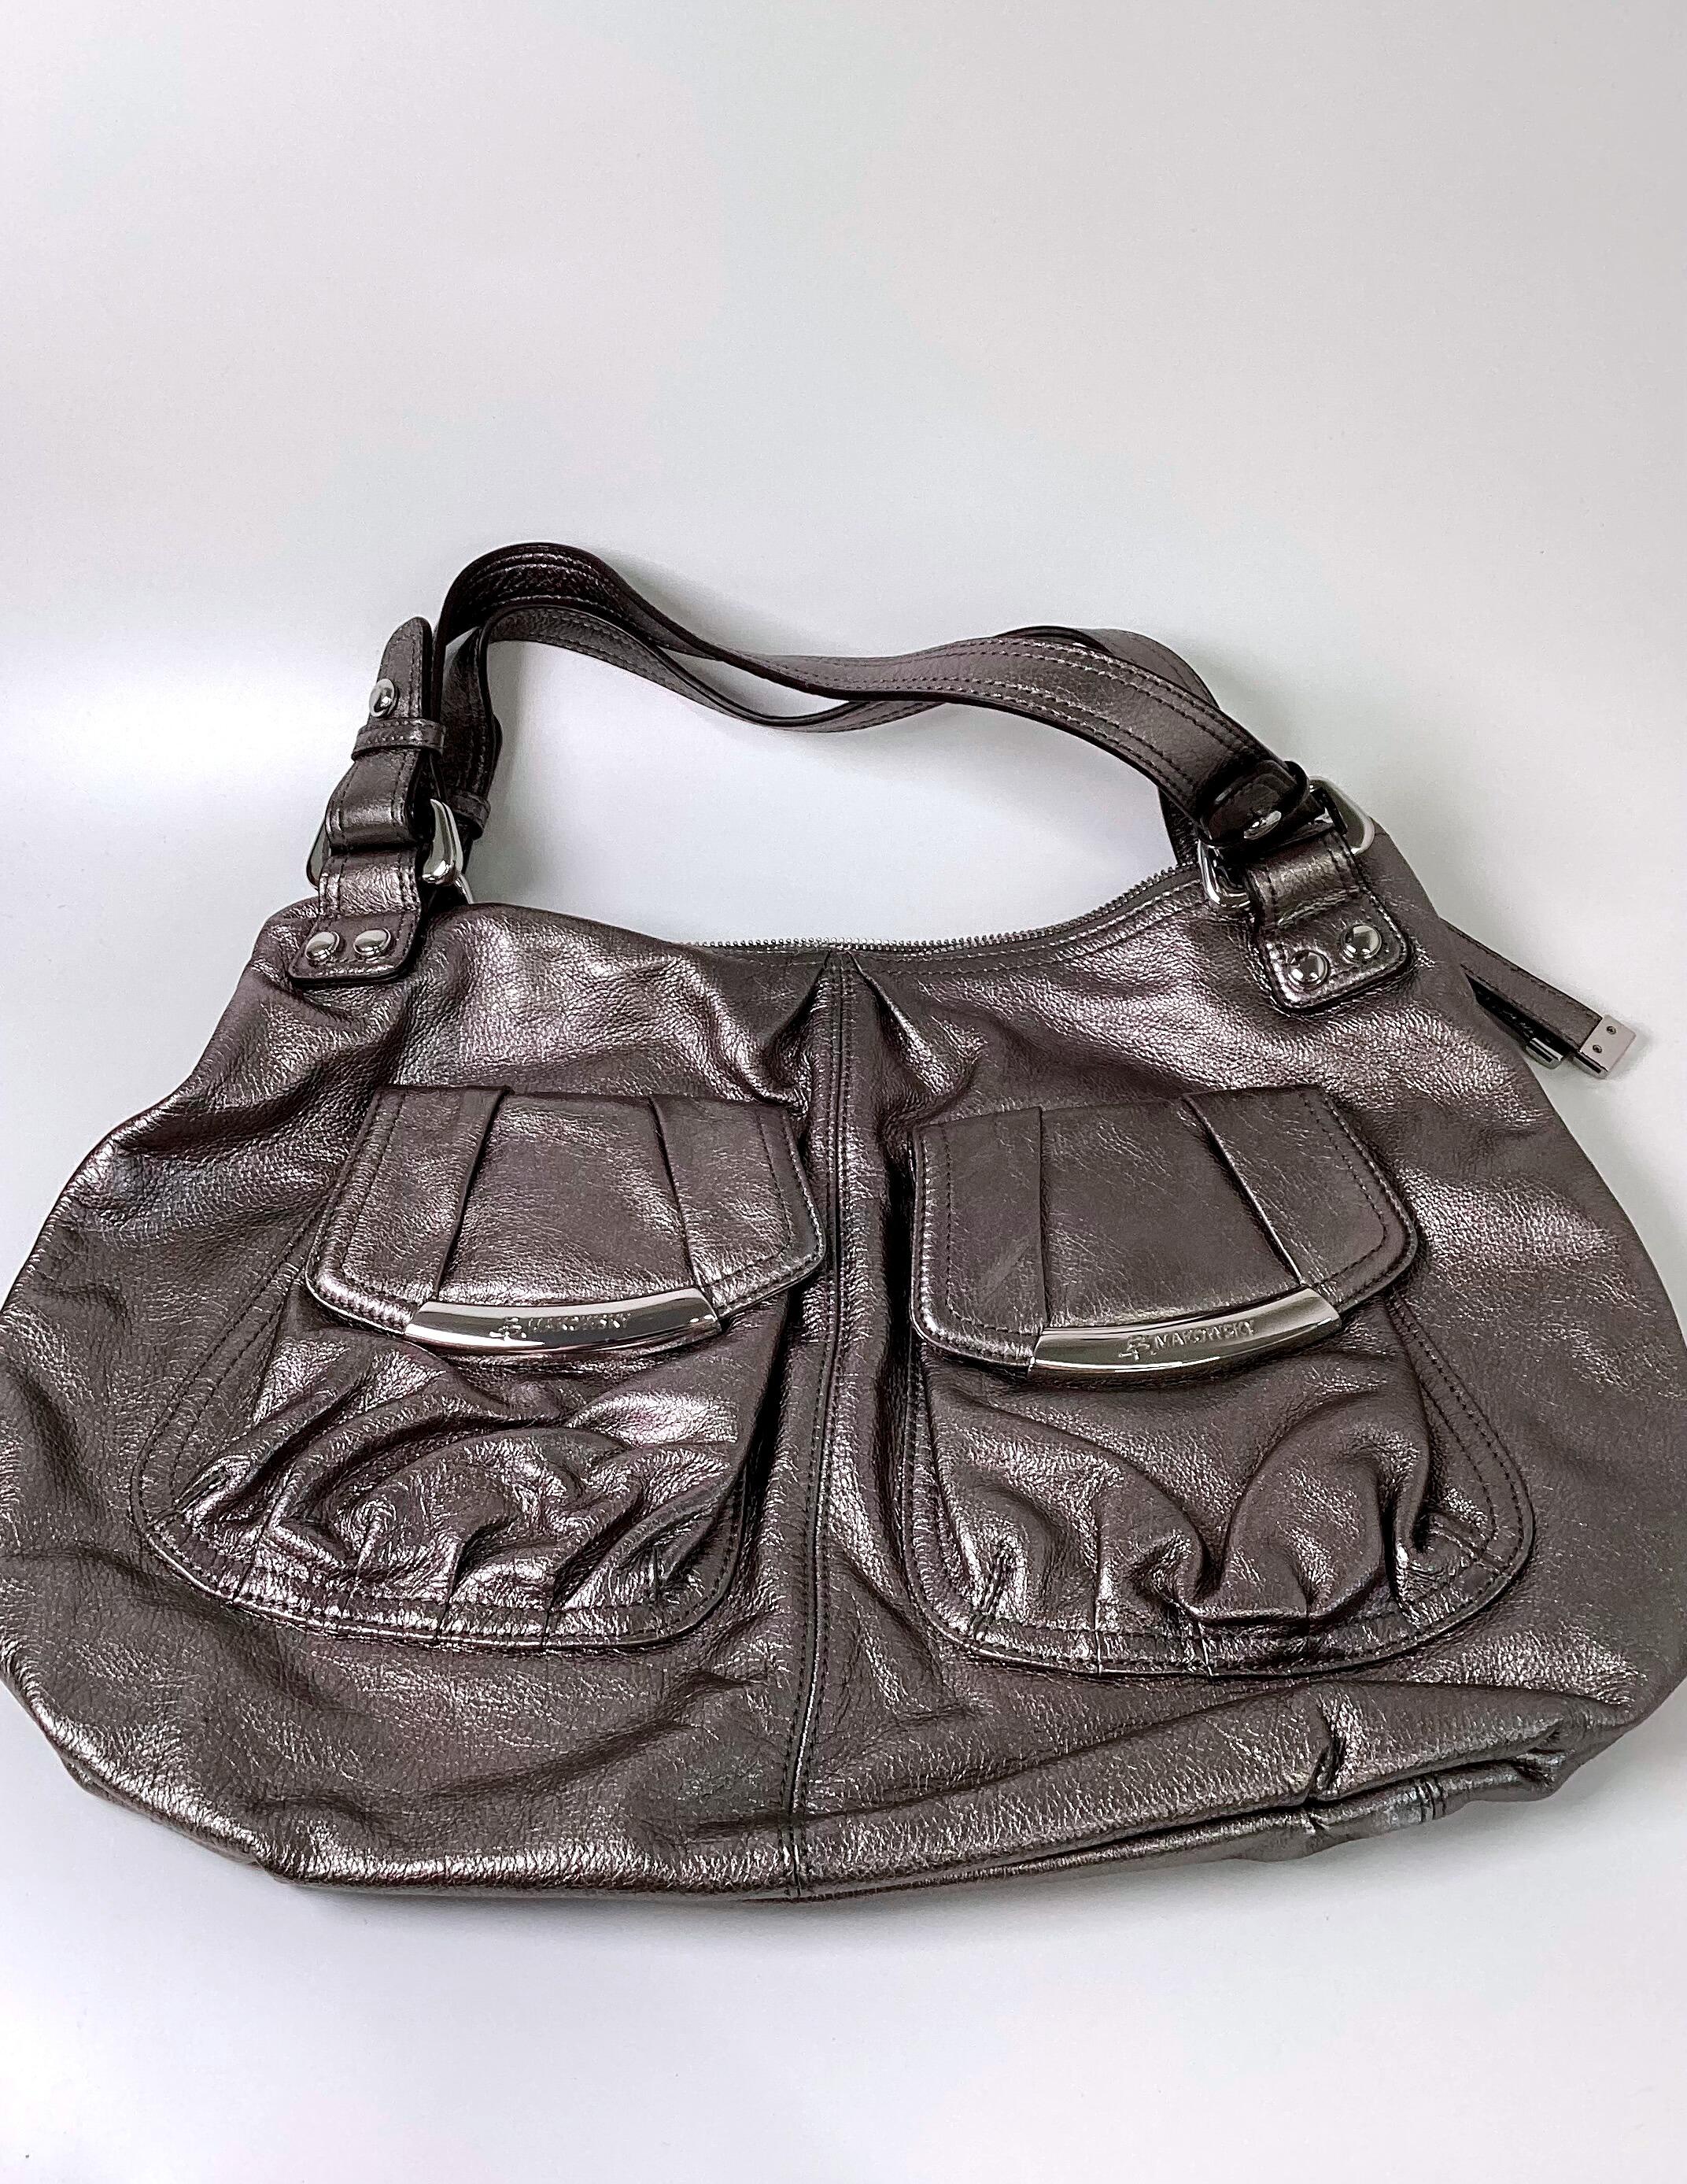 Jasper Conran London Darcey Leather Hobo Bag, Black